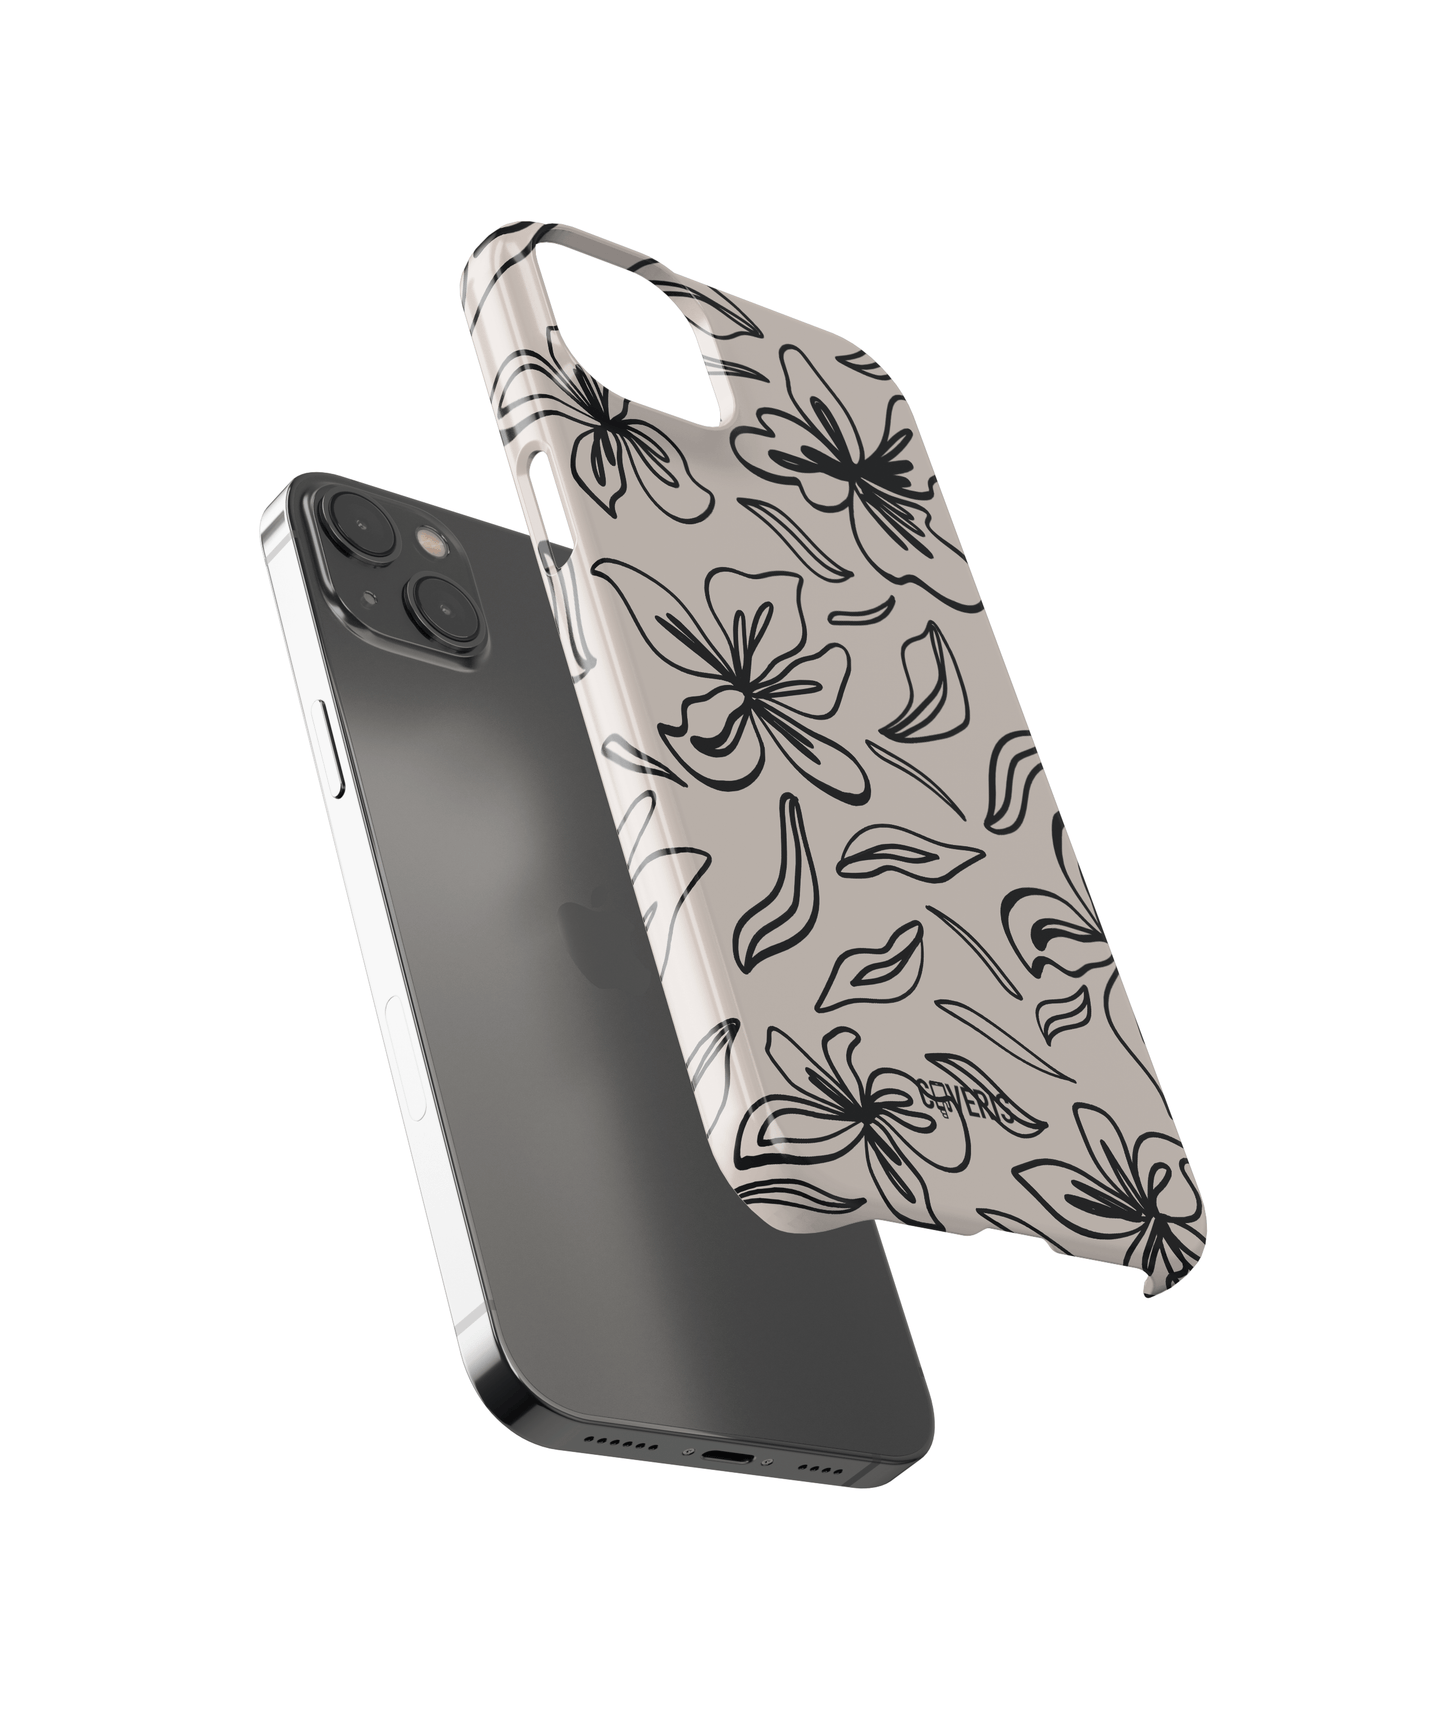 GardenGlam - iPhone 12 pro phone case